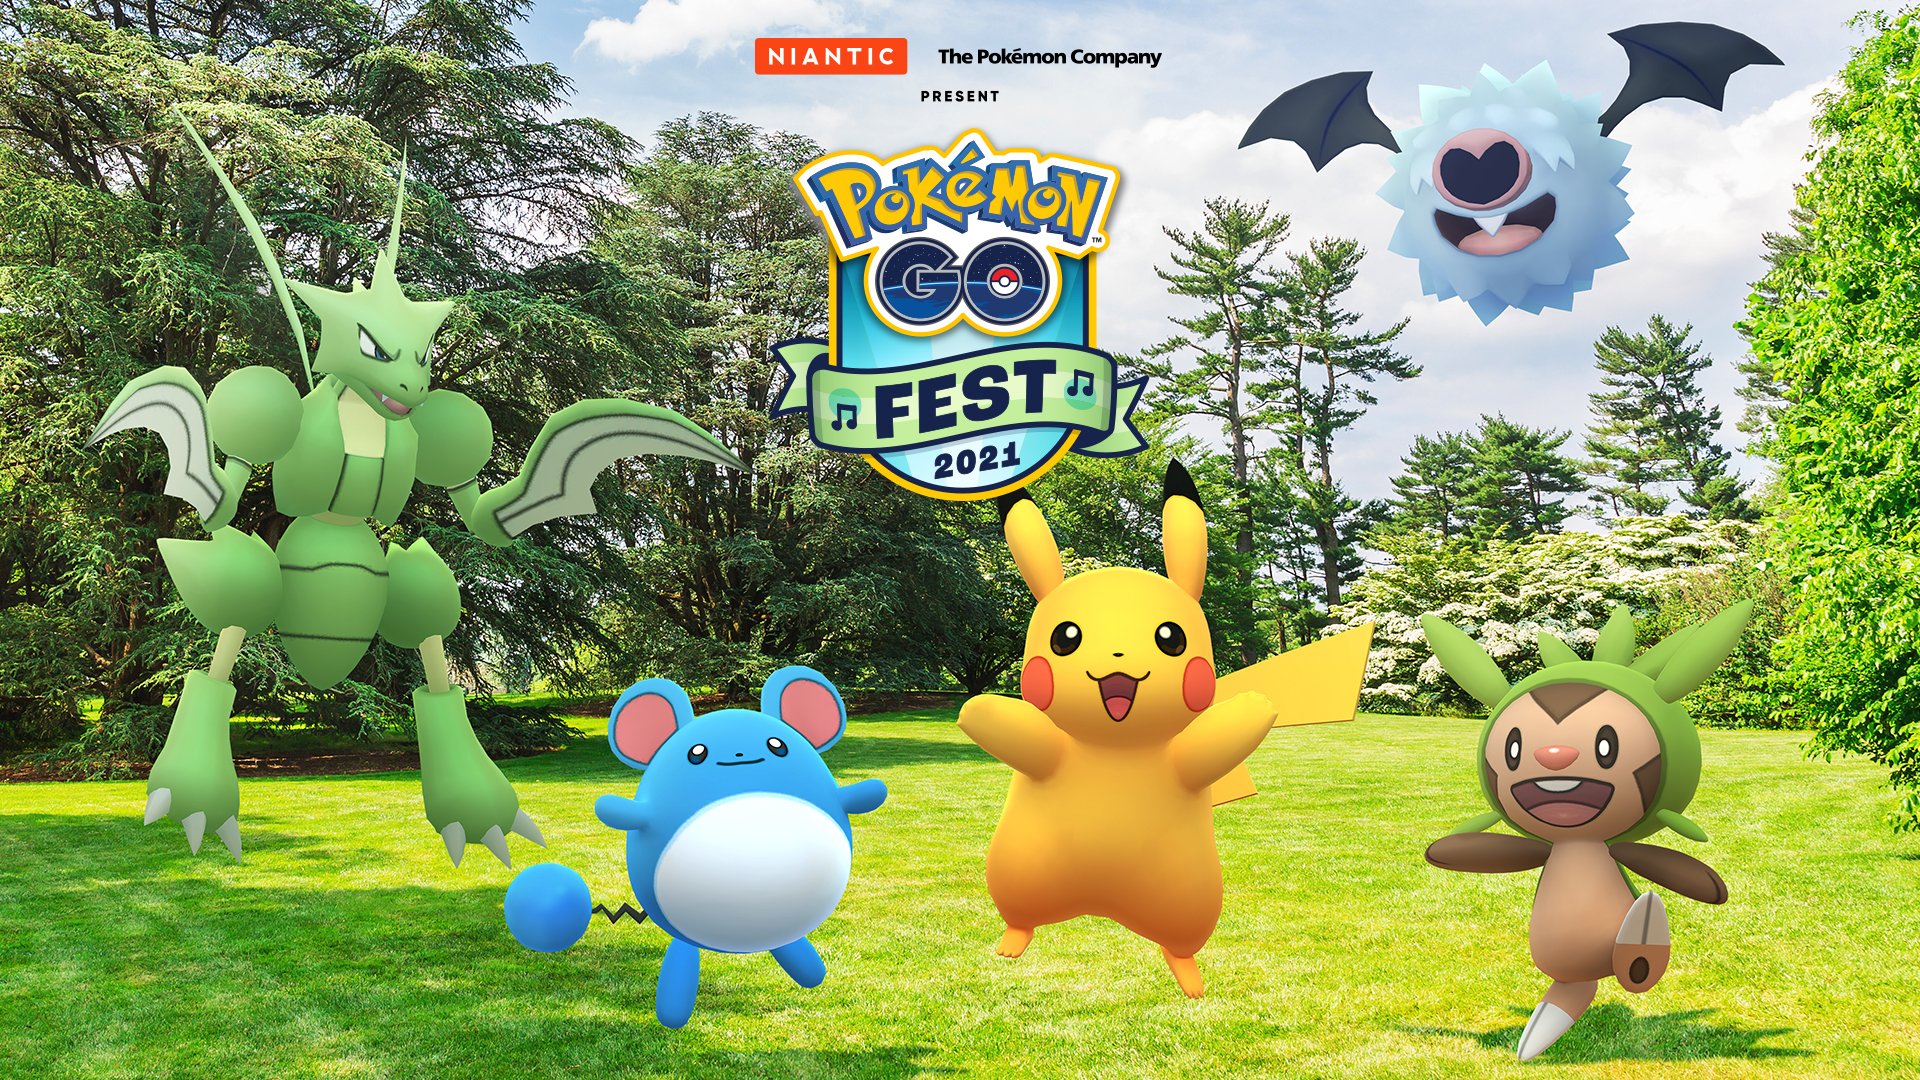 Will Meloetta Be Shiny At Pokémon GO Fest 2021?